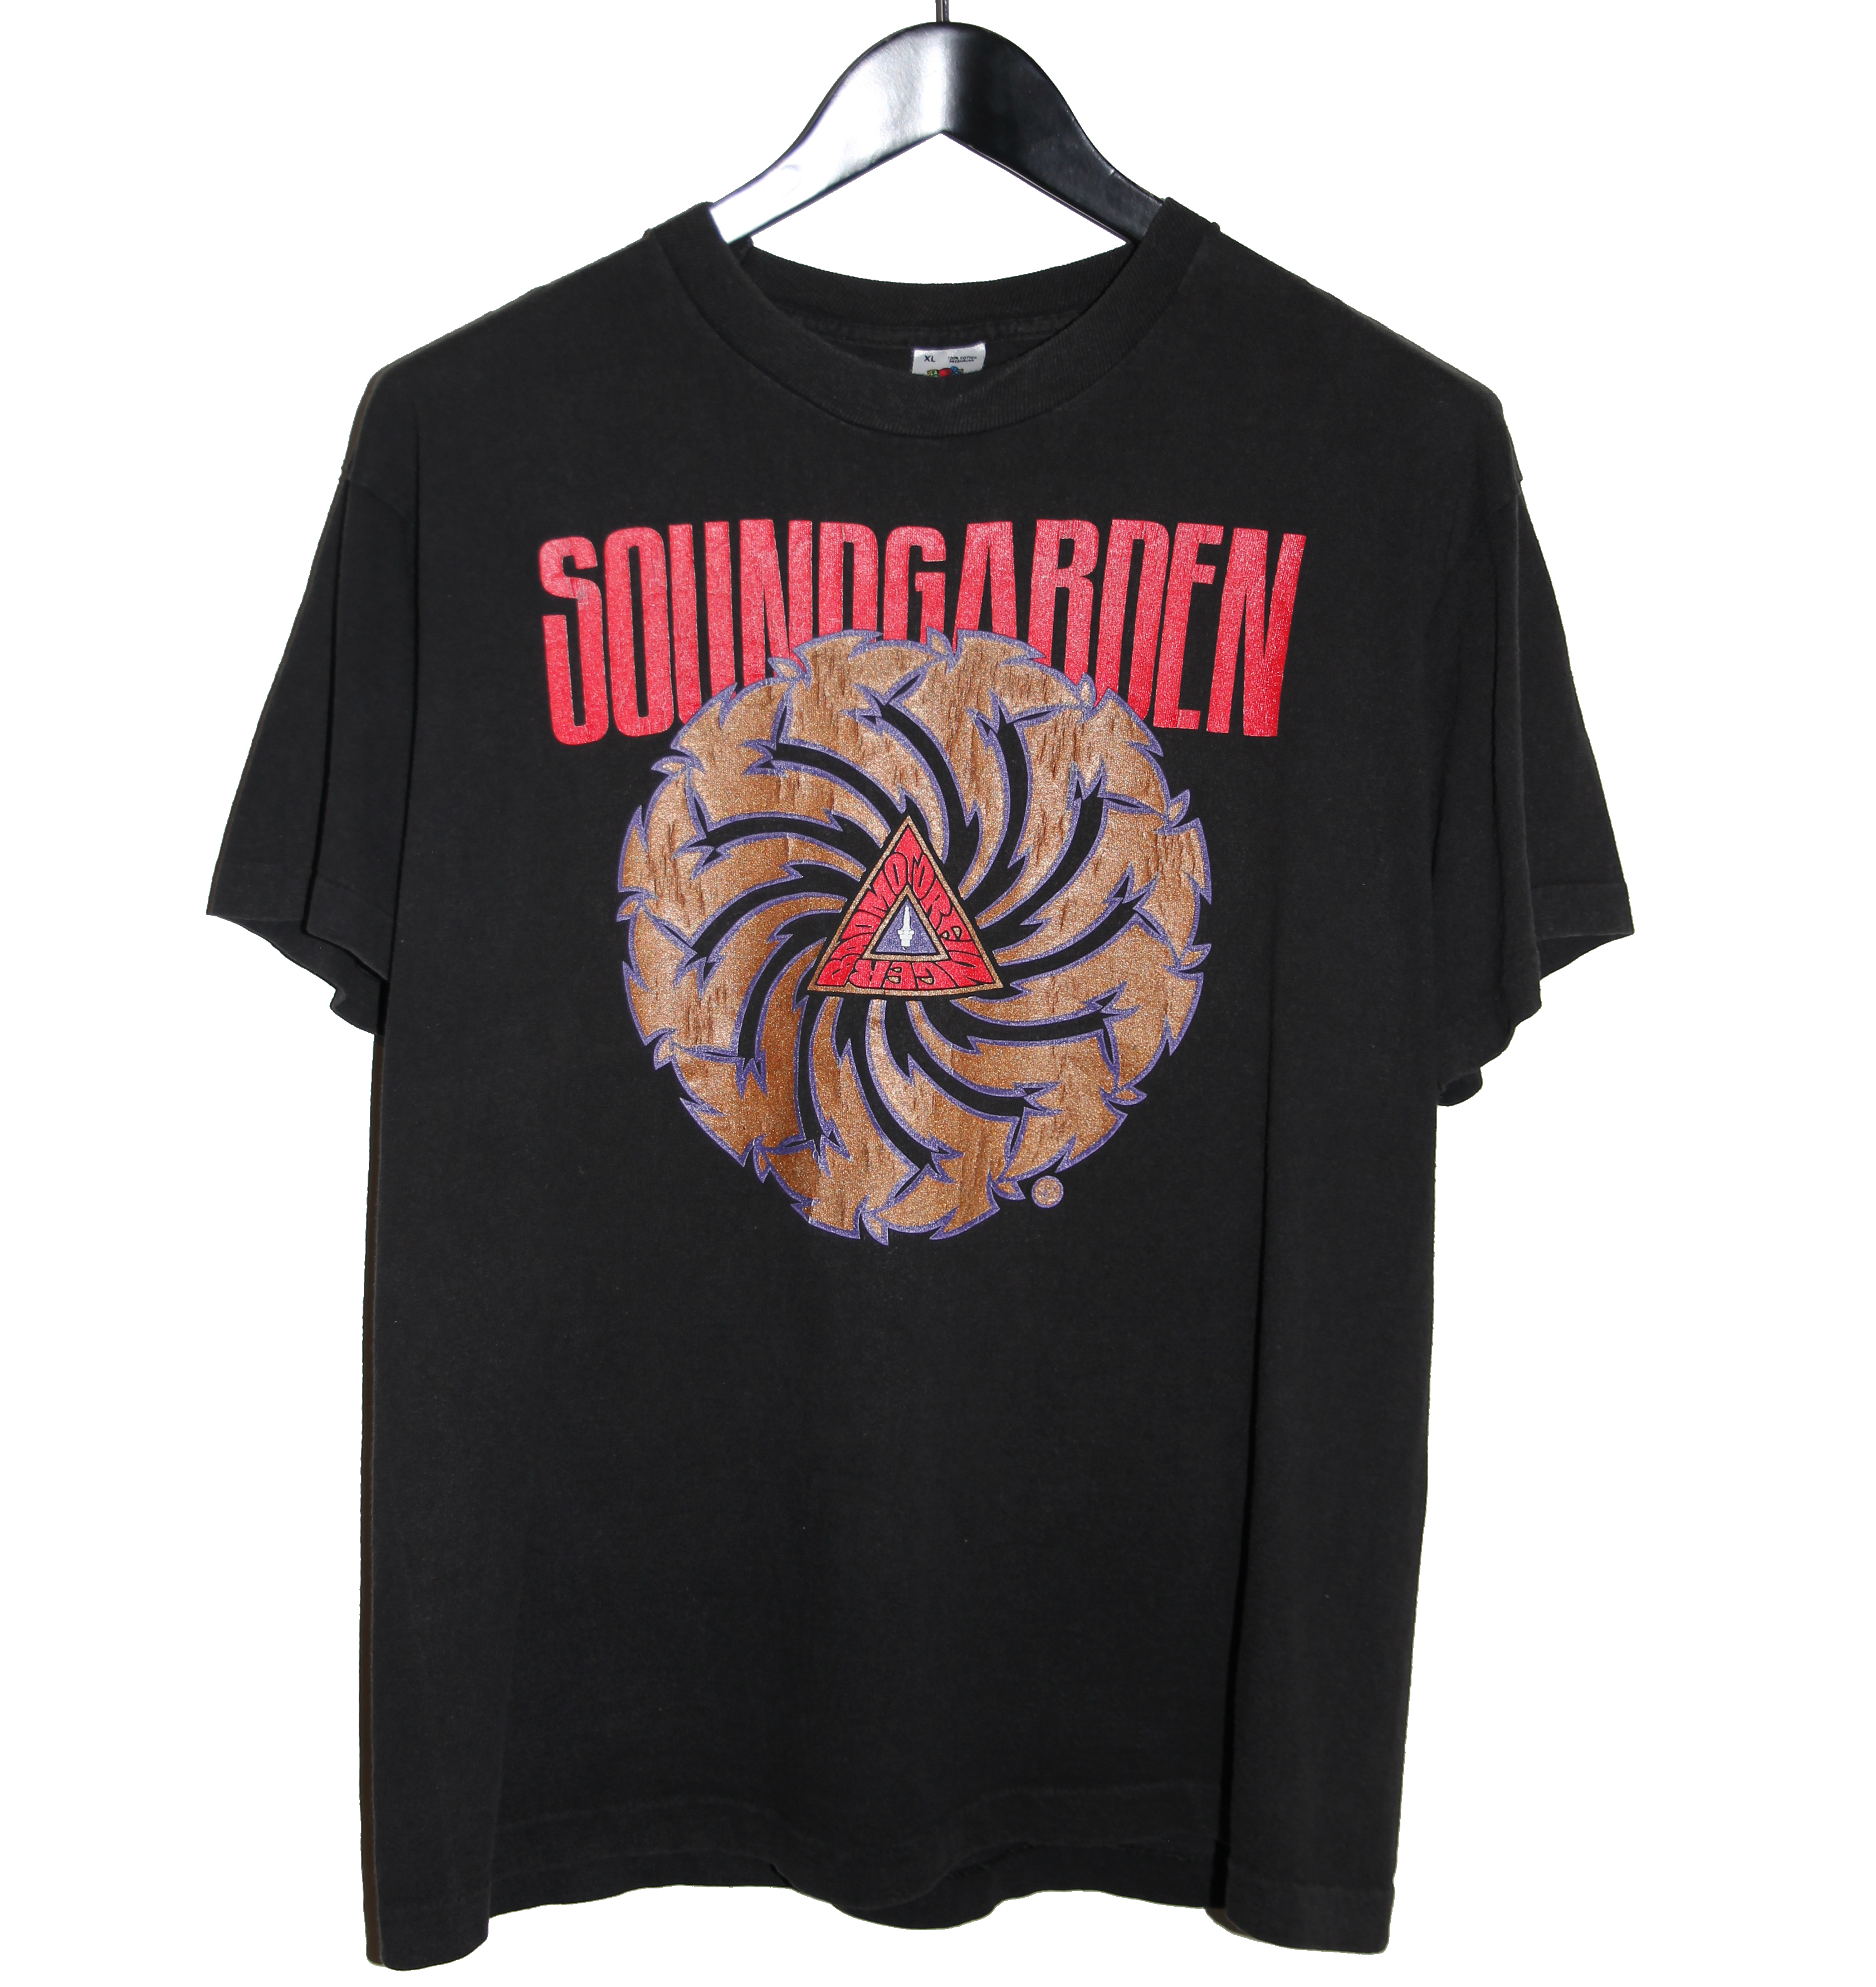 Soundgarden 1991 Badmotorfinger Album Shirt